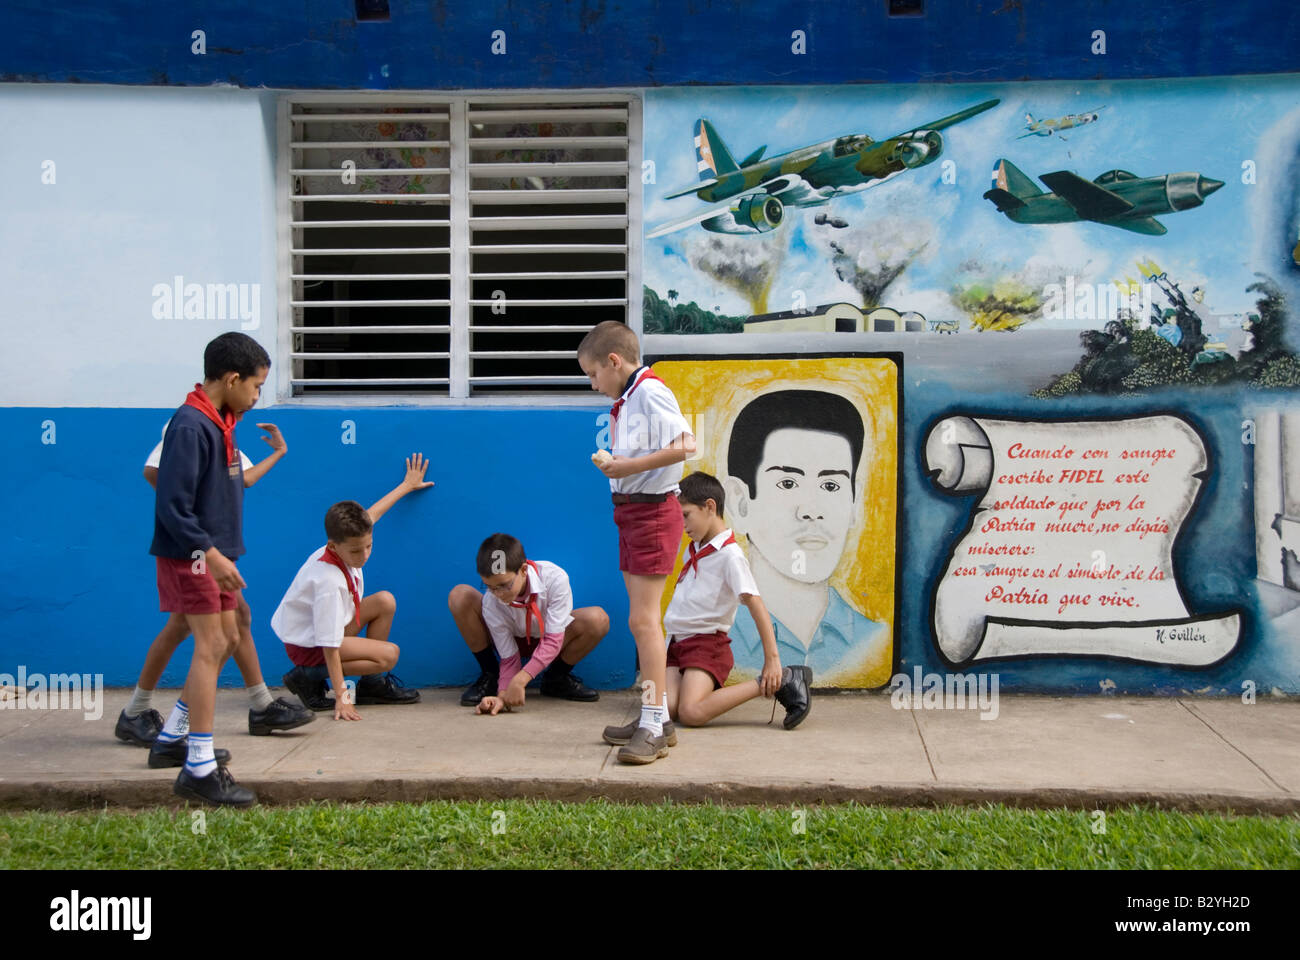 School children playing in playground beside socialist propaganda mural paintings Viñales Cuba Stock Photo